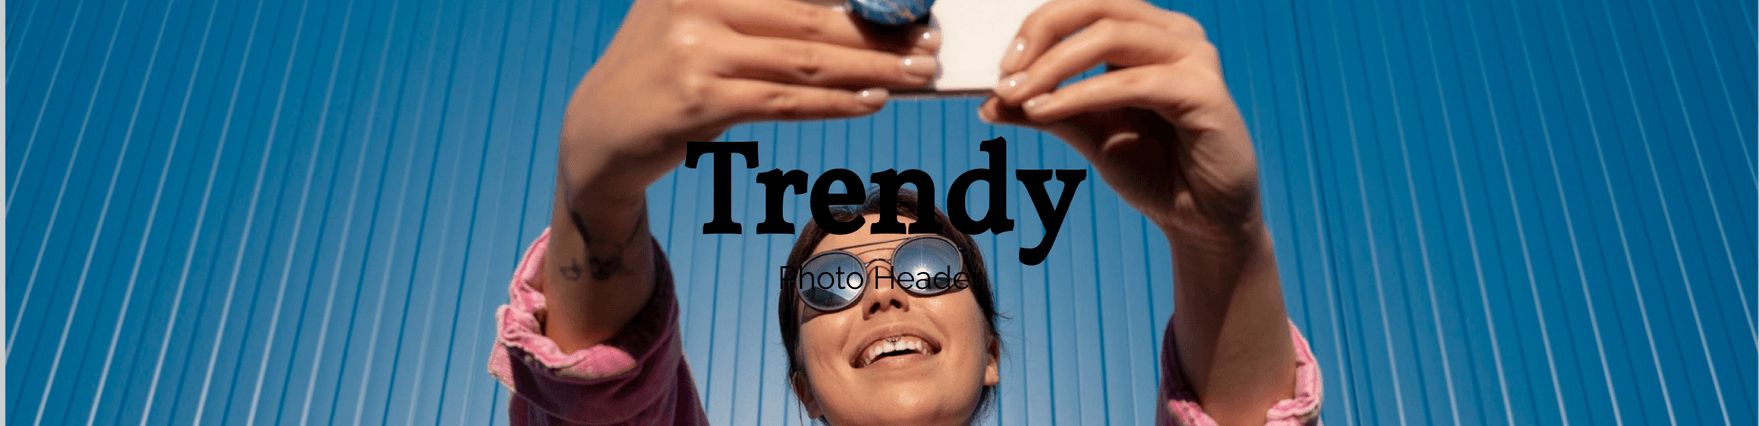 Trendy Photo Header